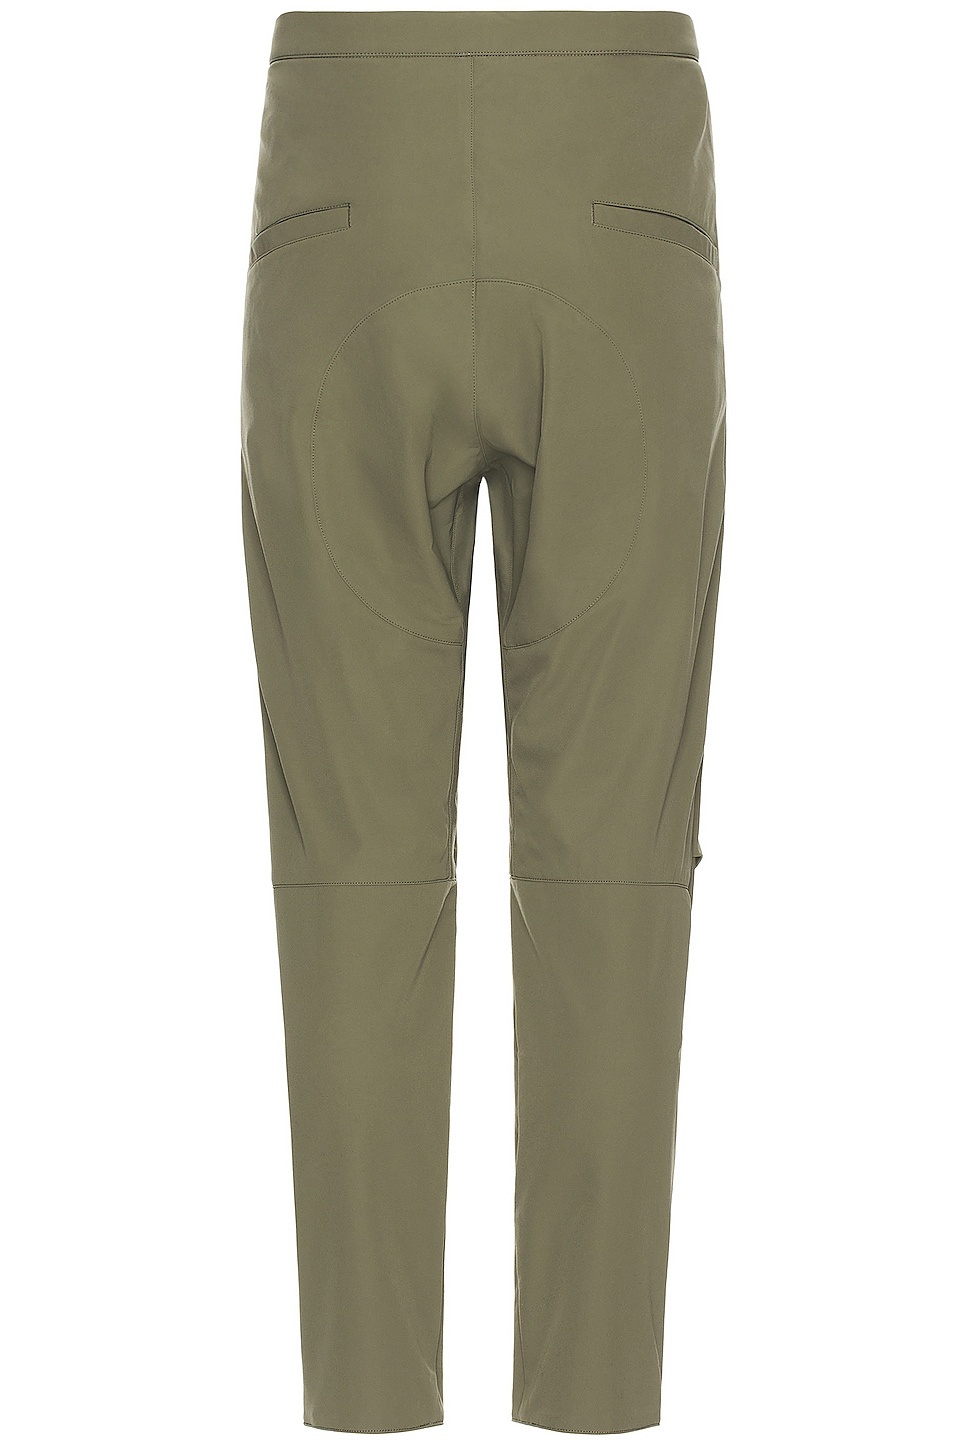 P15-ds Schoeller Dryskin Drawcord Trouser - 2